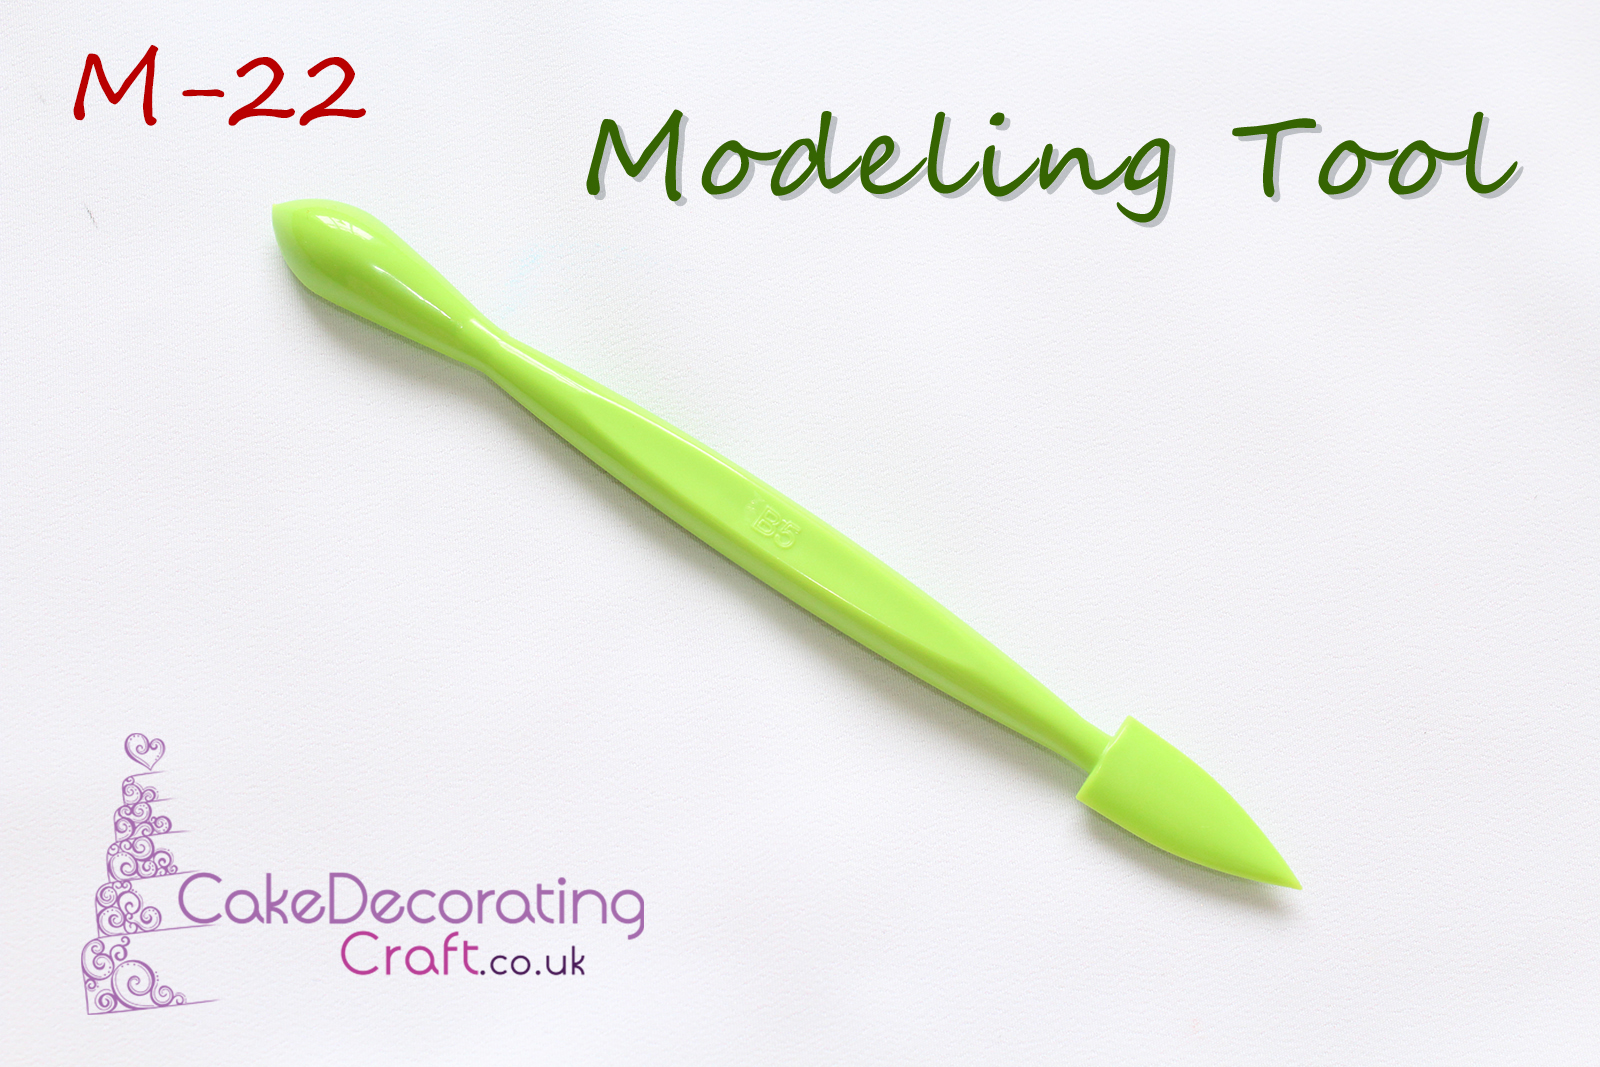 Cake Decorating Craft Modelling Tools | Double Ended | Gum Paste Flower Paste Modelling Sugar Paste Craft | M-22